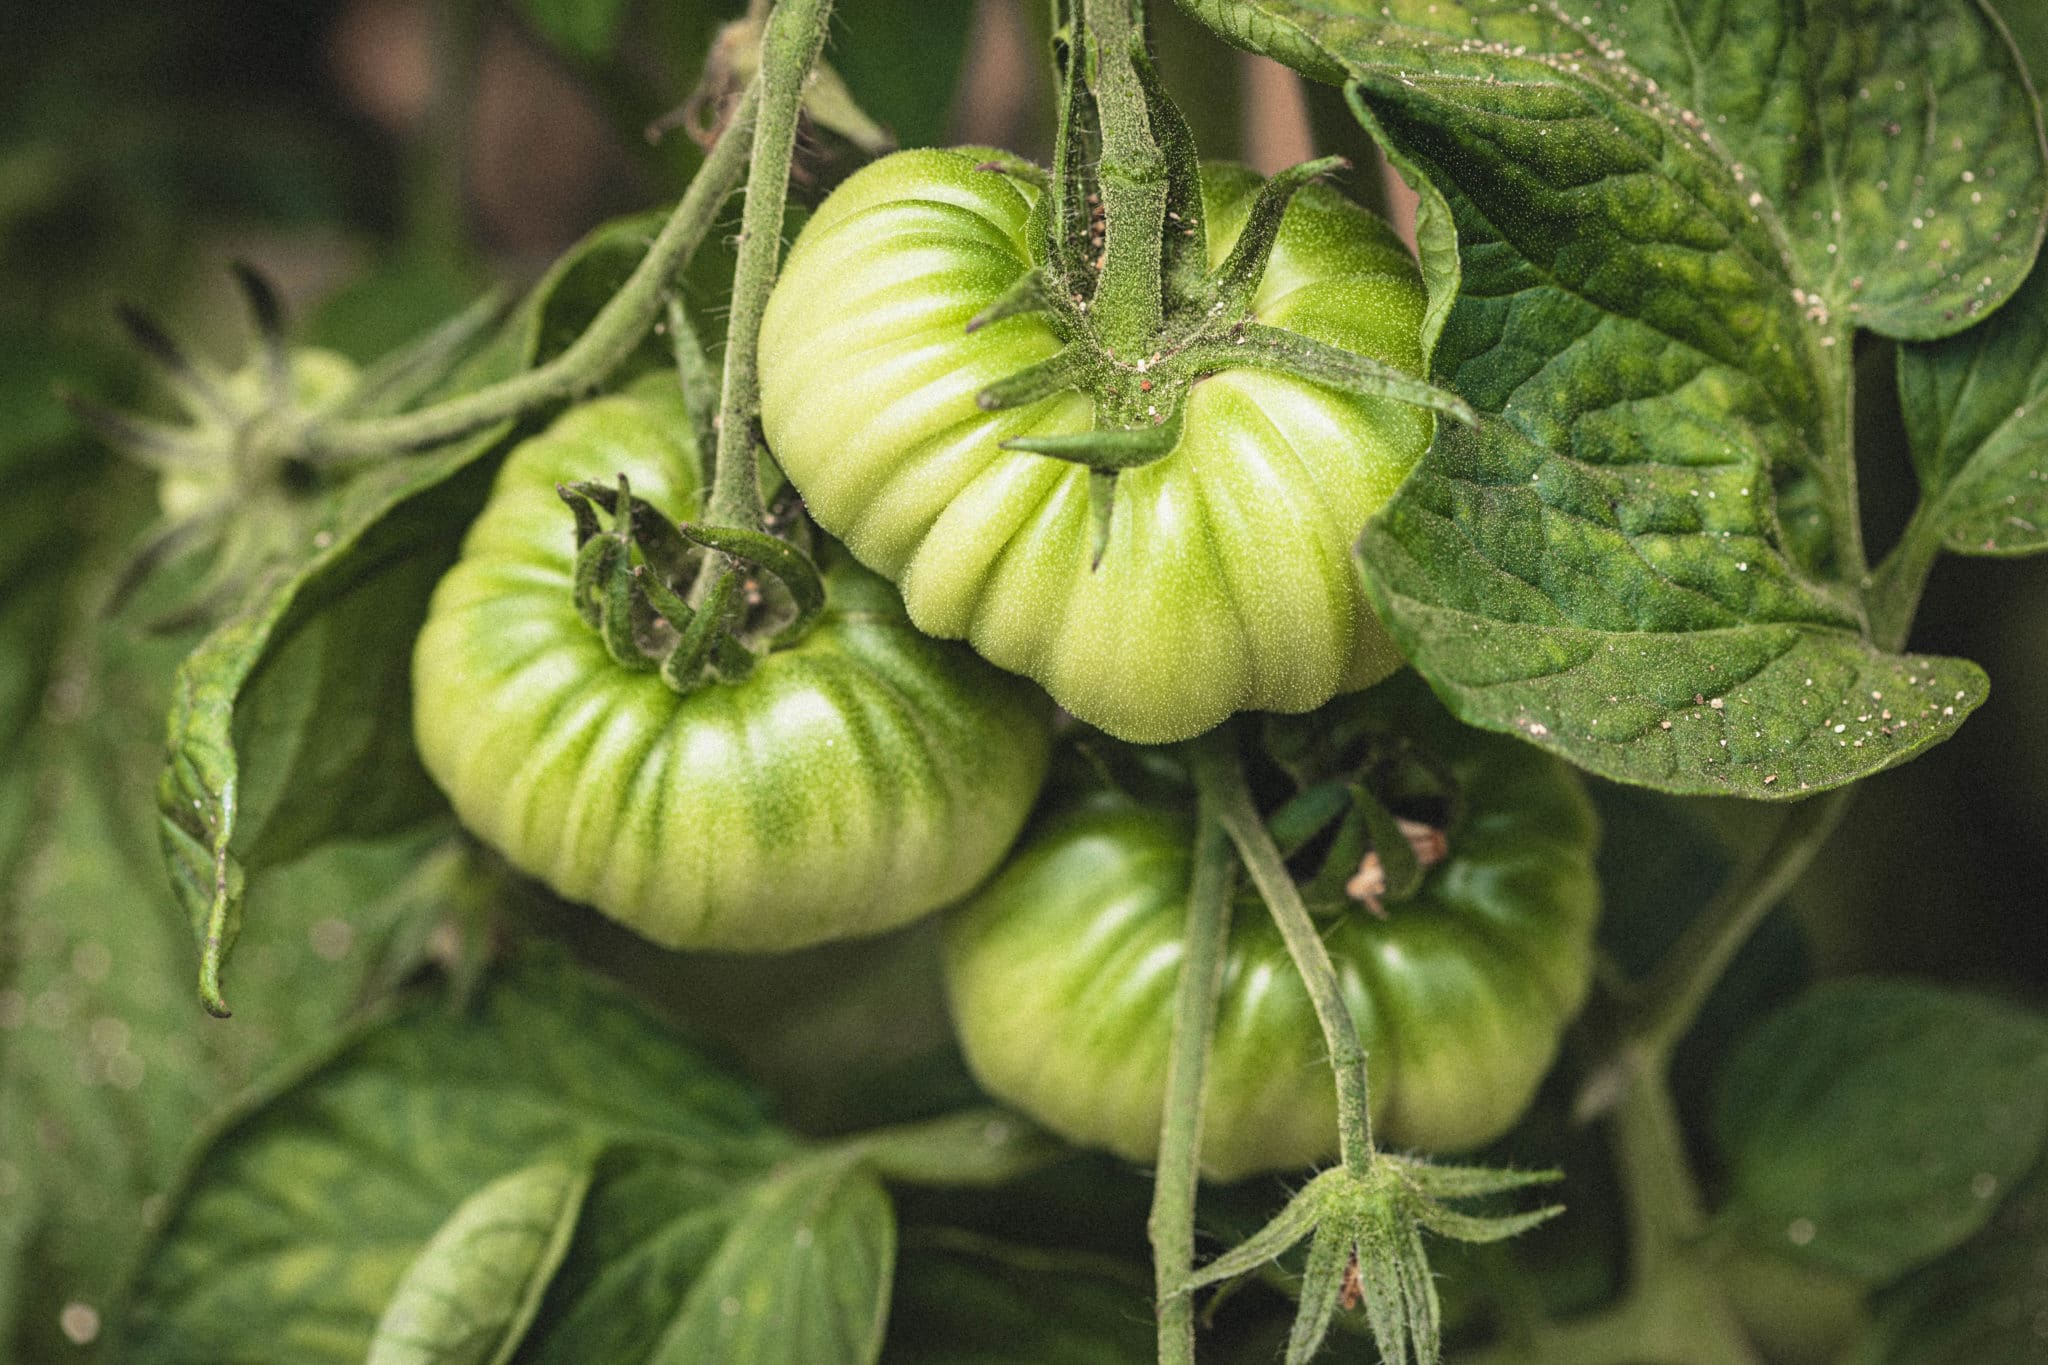 Field kitchen tomatoes